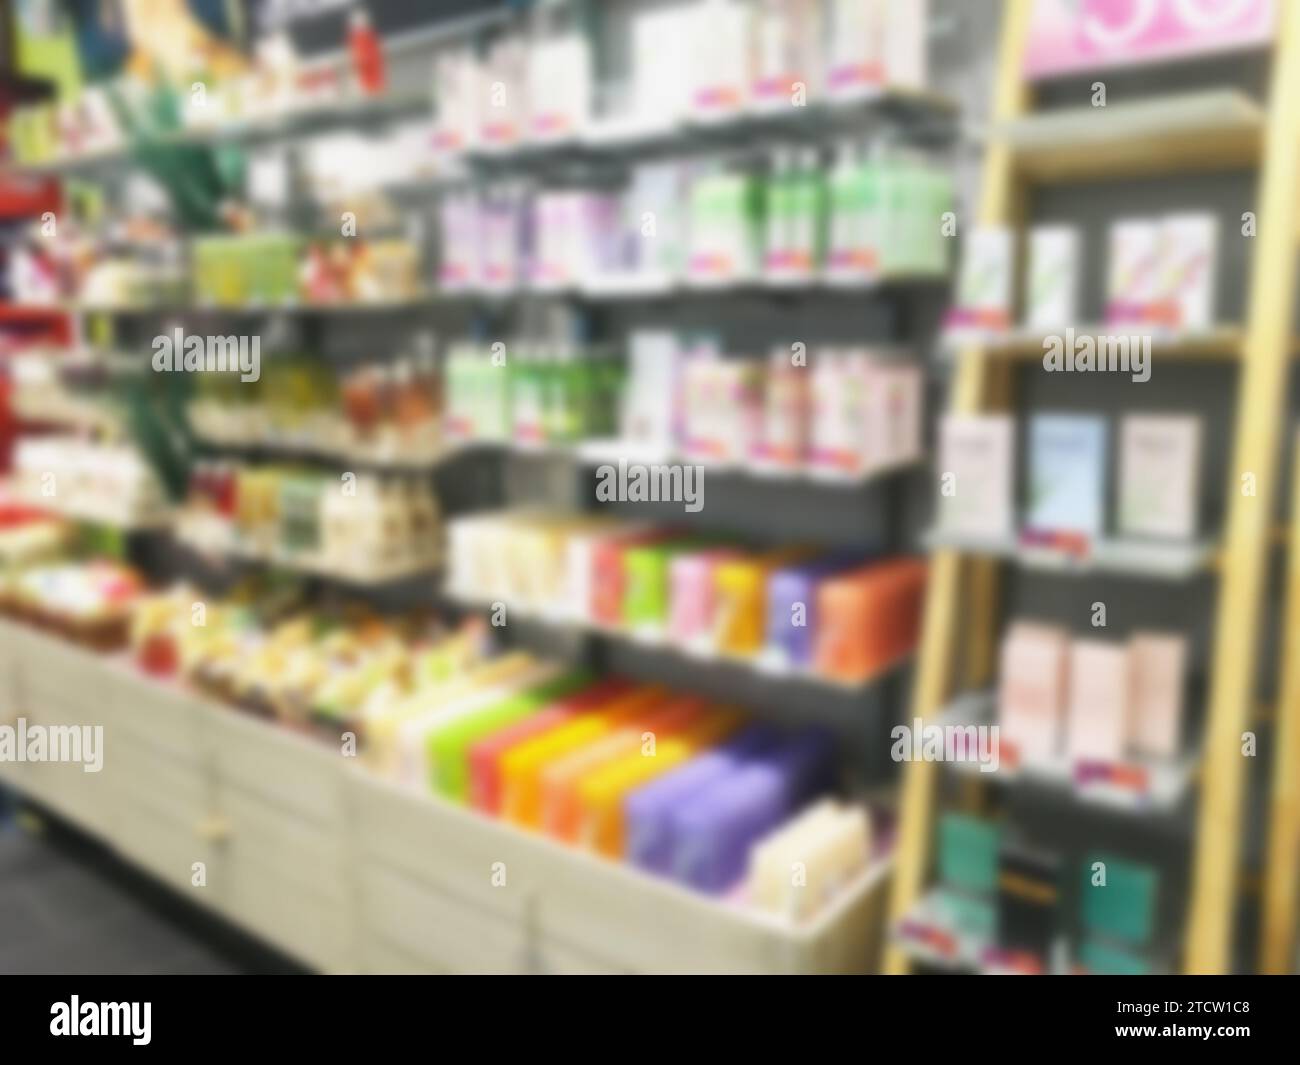 blur health beauty store shelves background Stock Photo